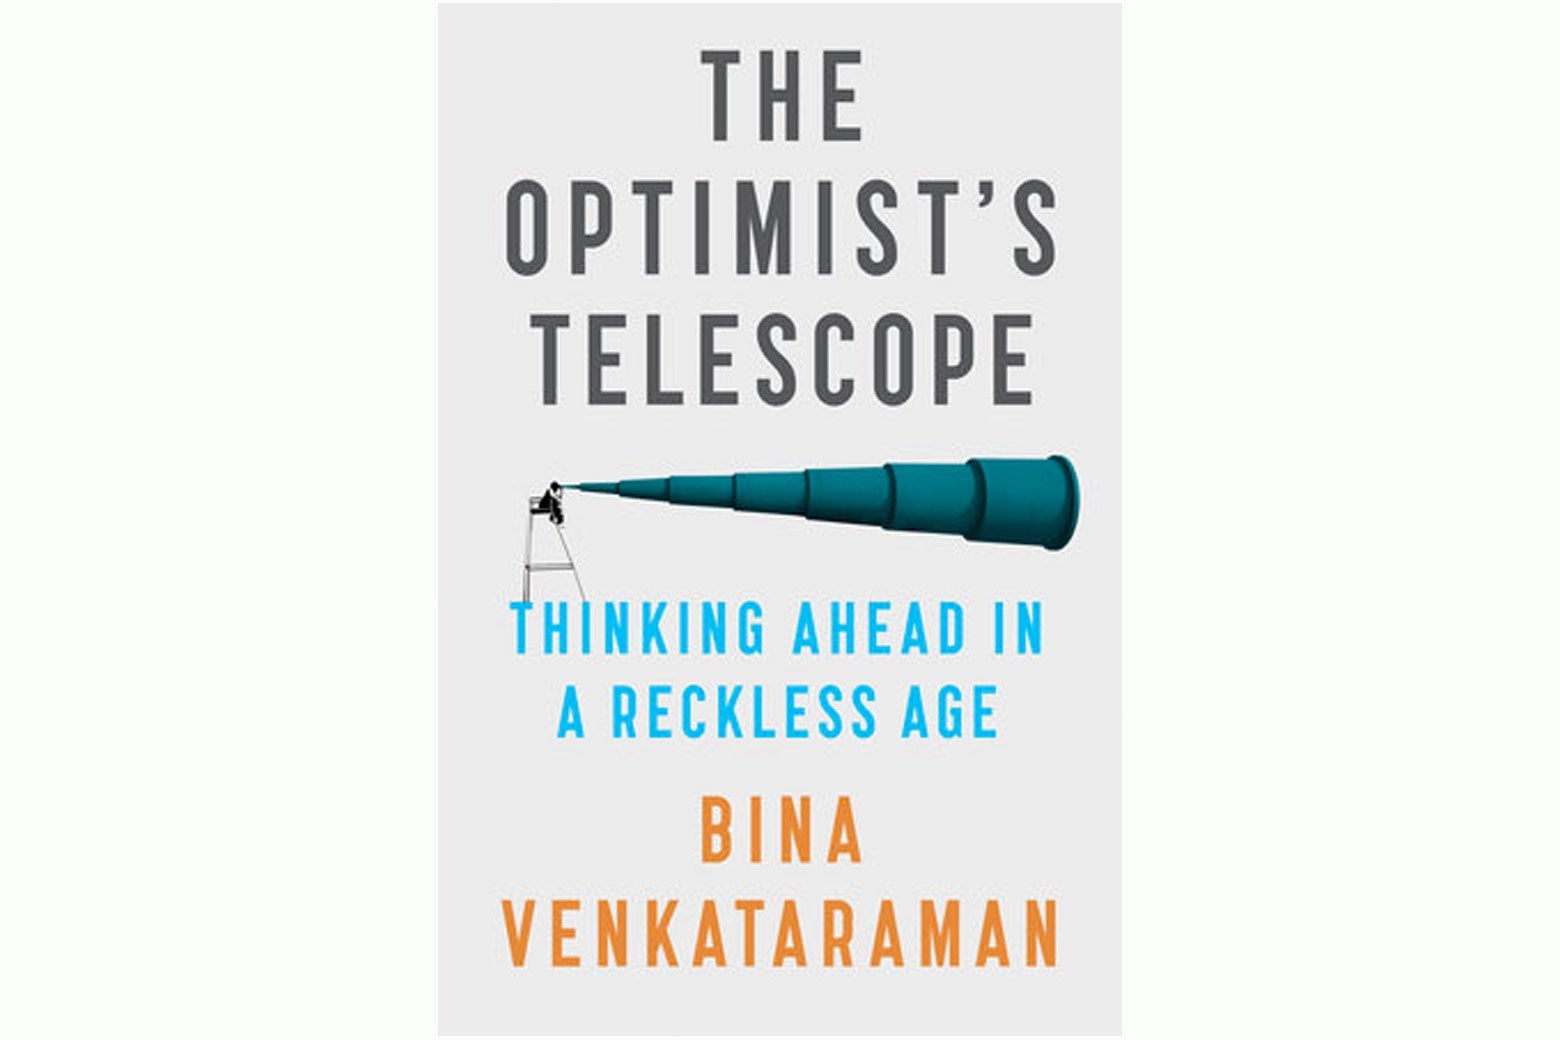 The cover of The Optimist‘s Telescope.